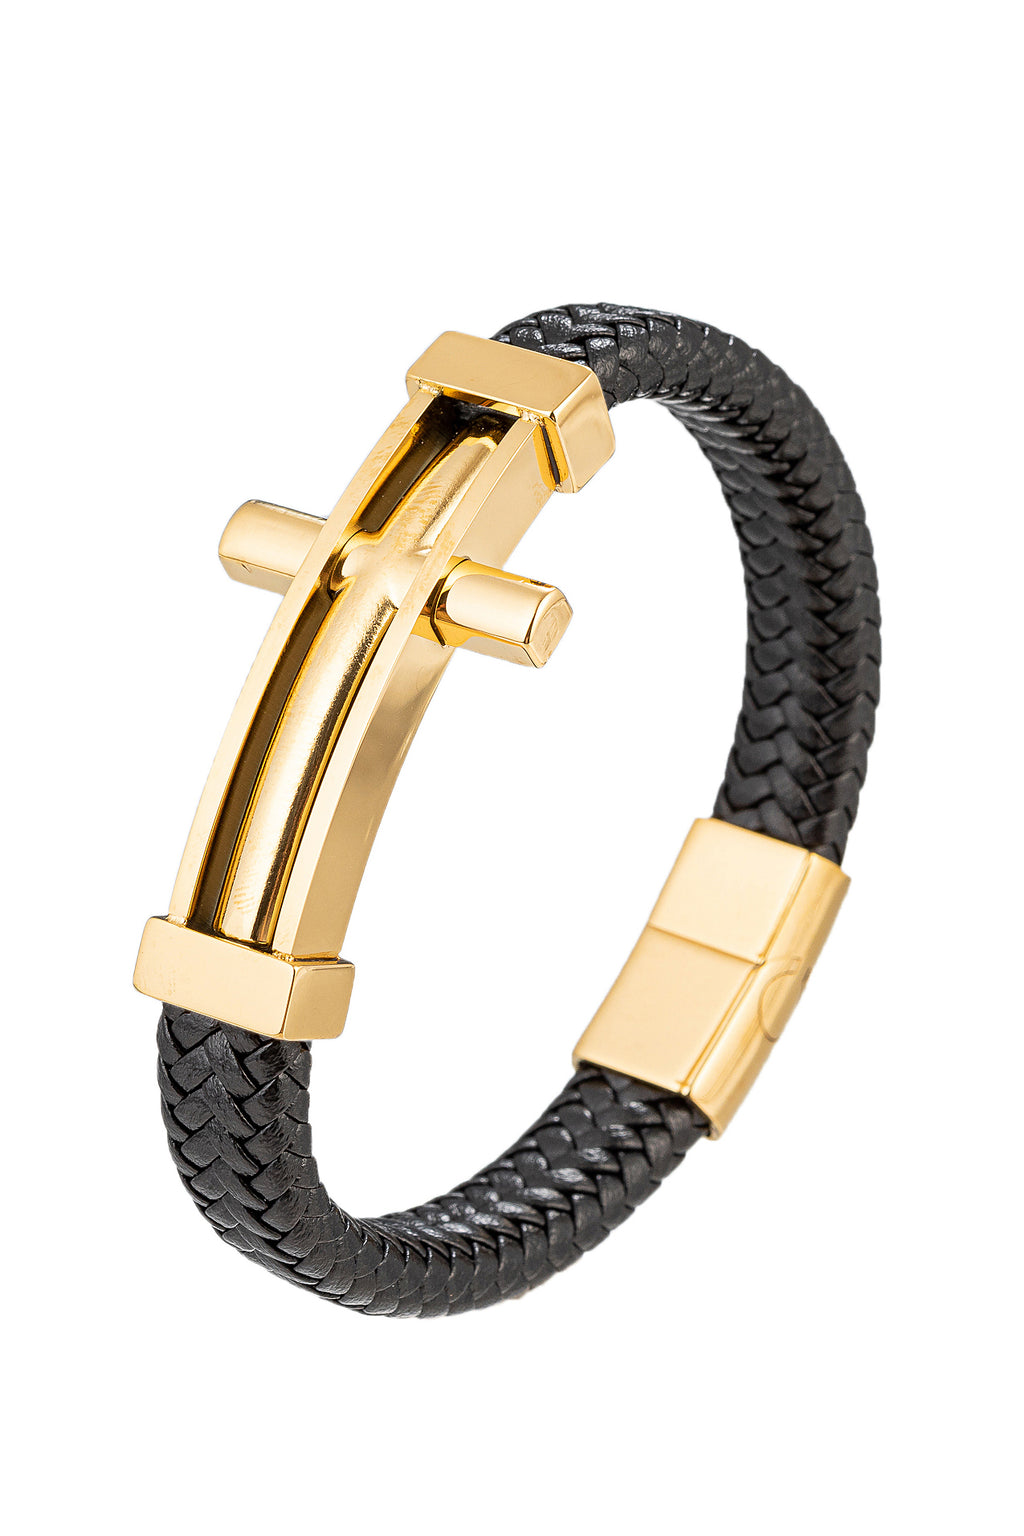 Gold tone titanium double cross pendant on a black leather bracelet.